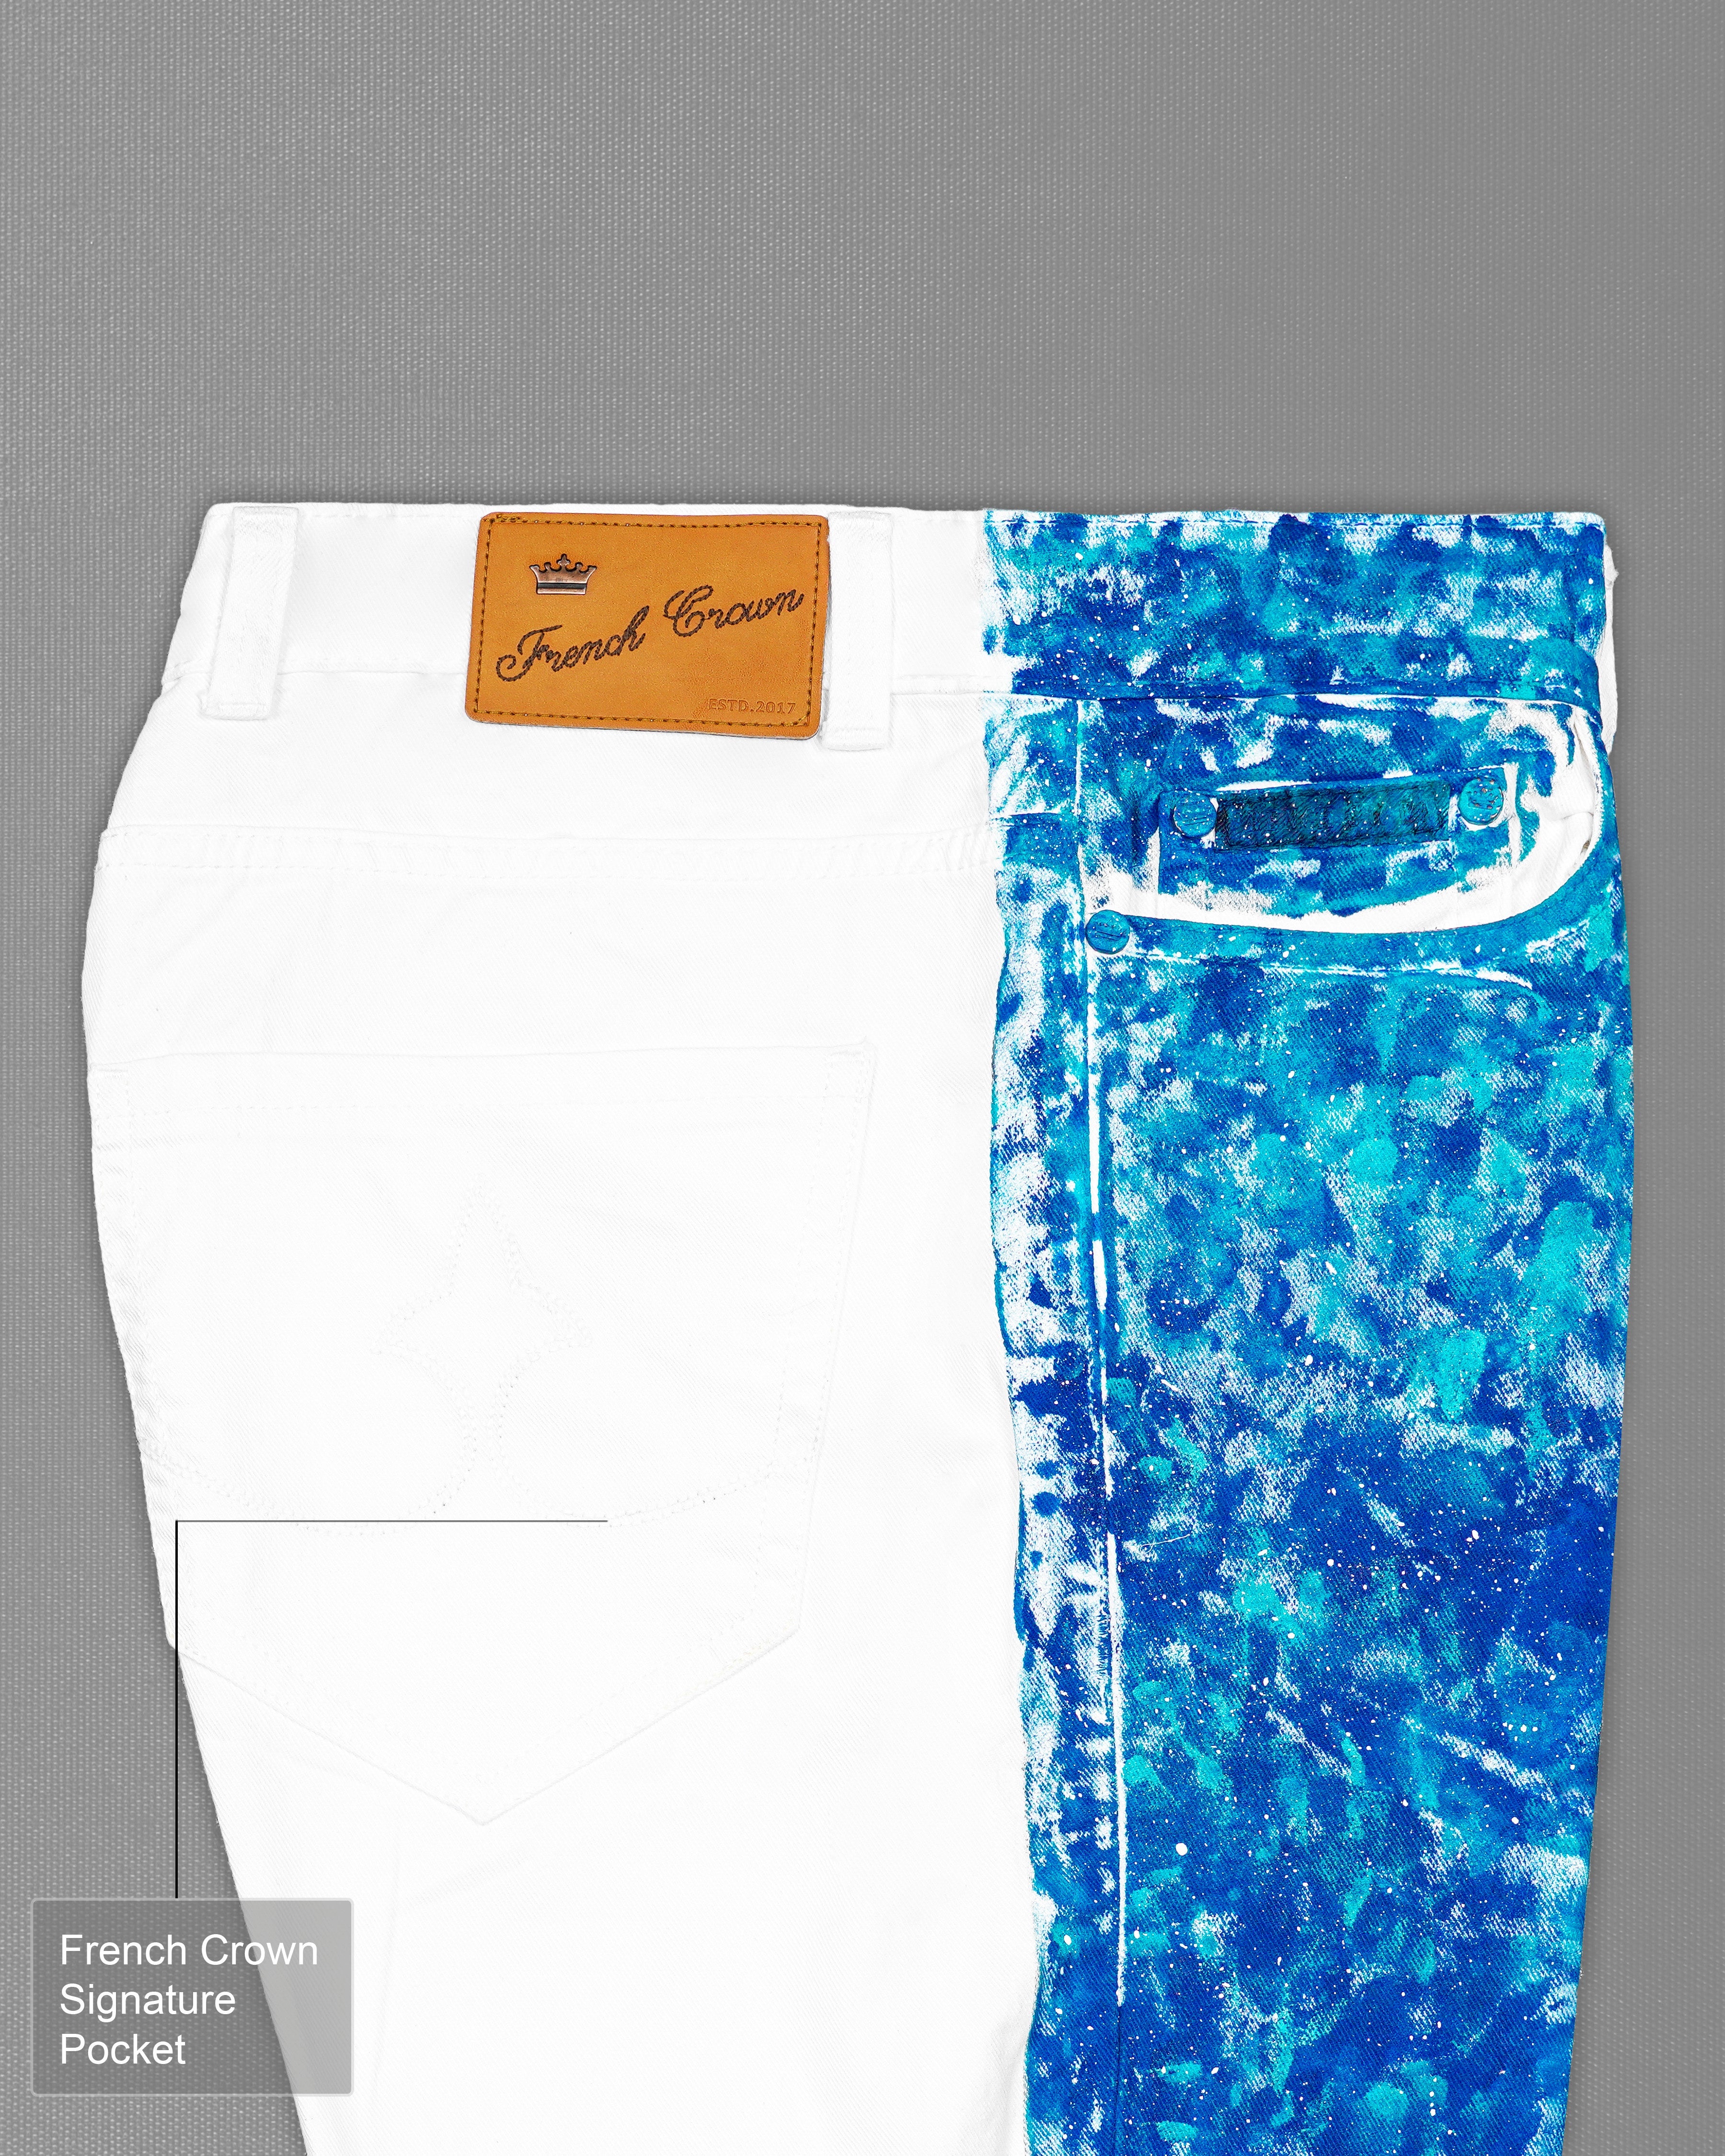 Bright White and Lochmara Blue Rinse Wash Hand Painted Denim J100-ART005-30, J100-ART005-32, J100-ART005-34, J100-ART005-36, J100-ART005-38, J100-ART005-40